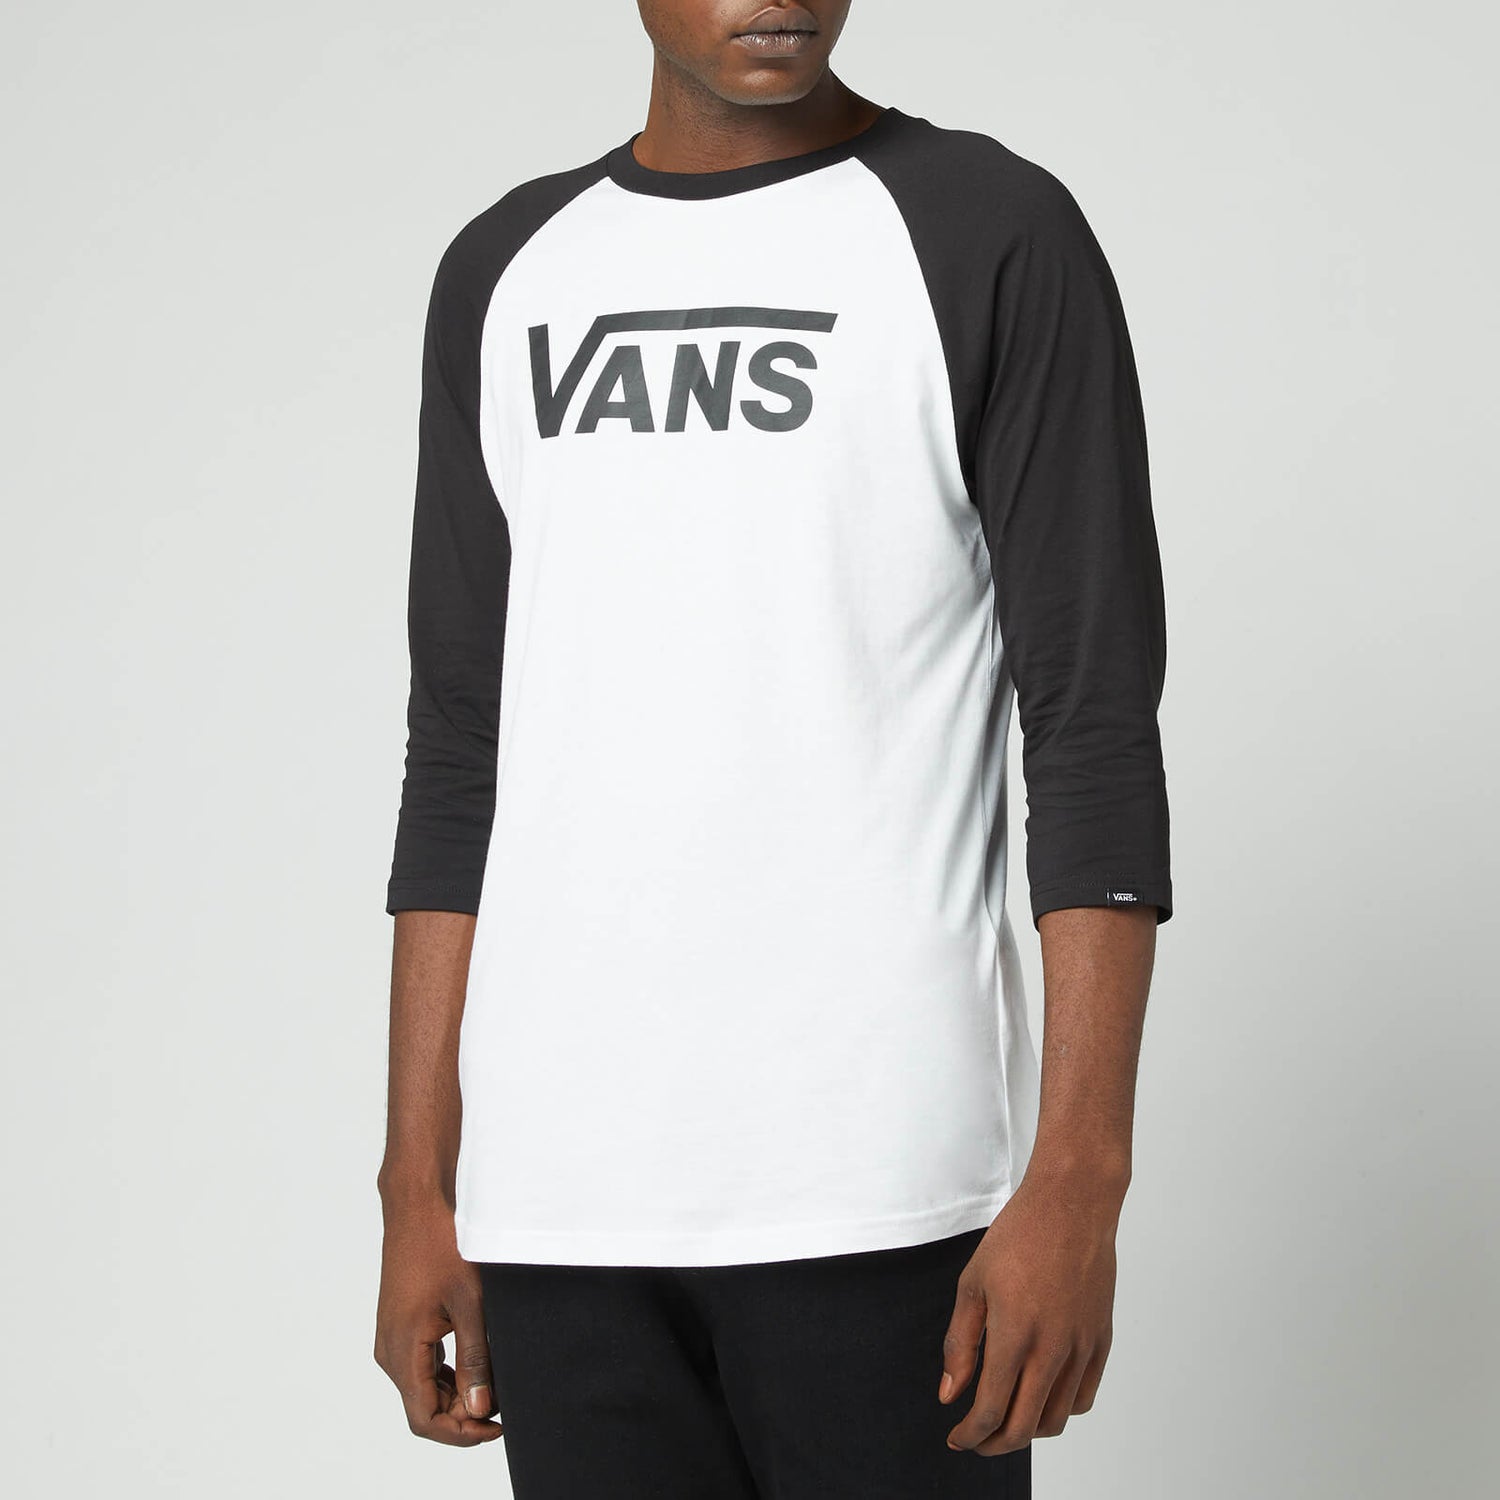 Vans Men's Classic Raglan Top - White/Black